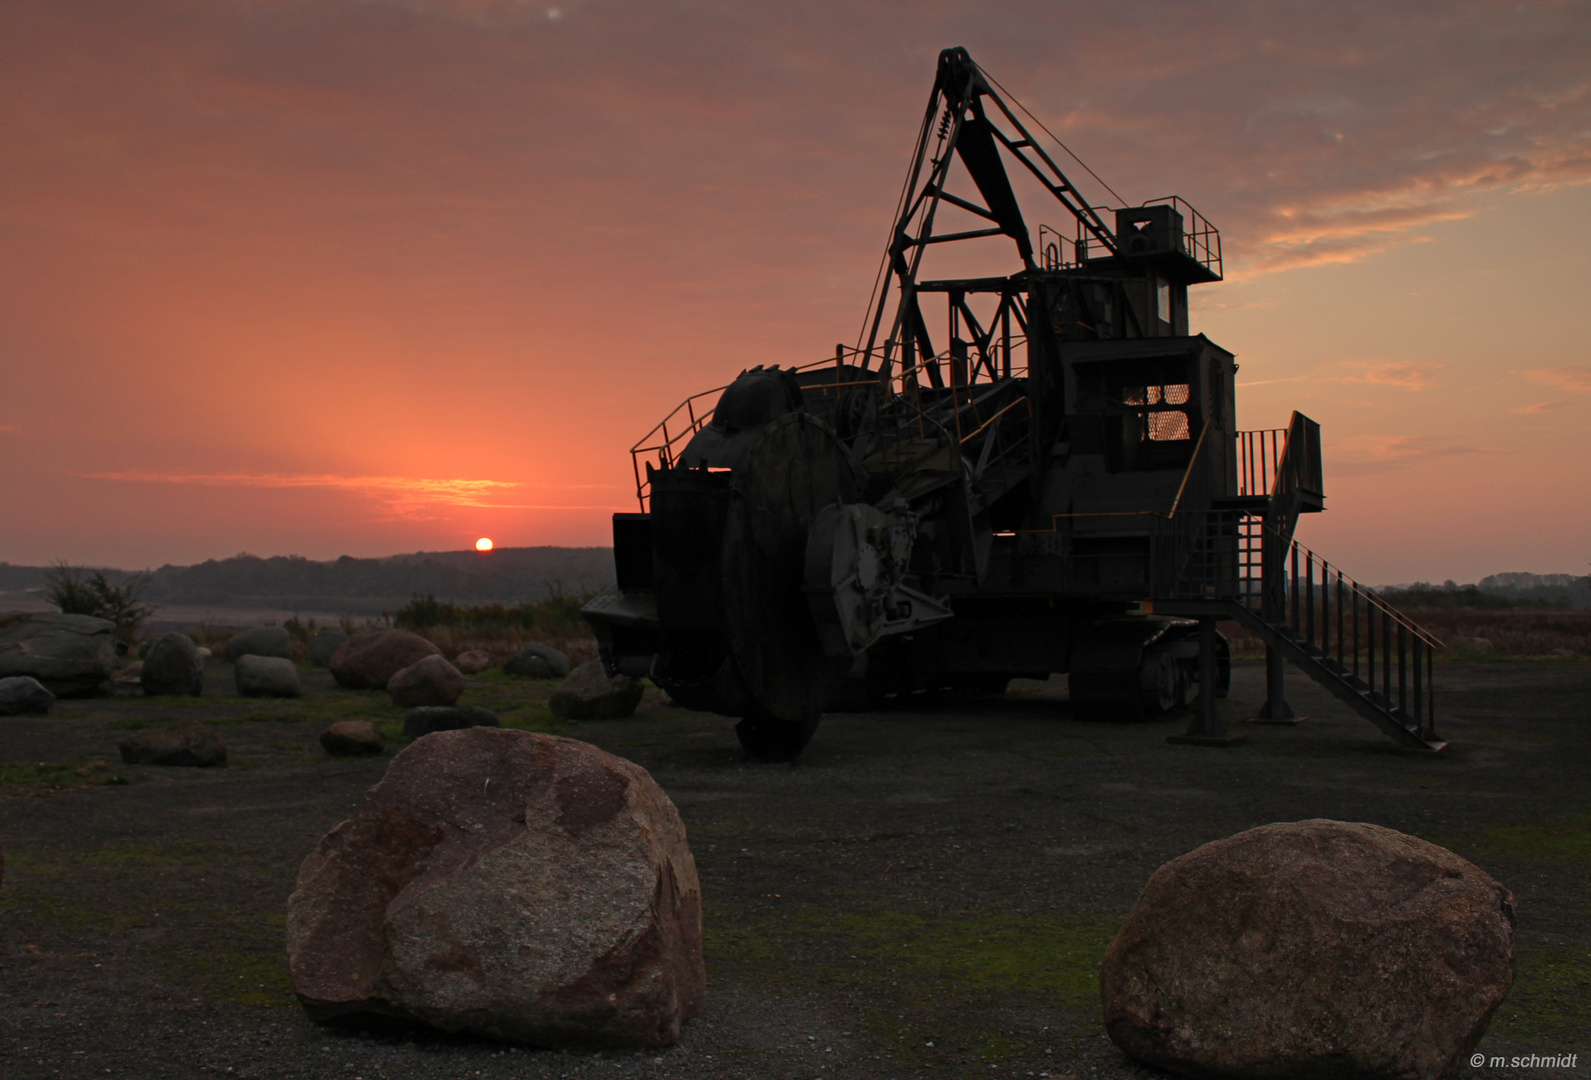 Sonnenaufgang am Tagebau (Abraumbagger)